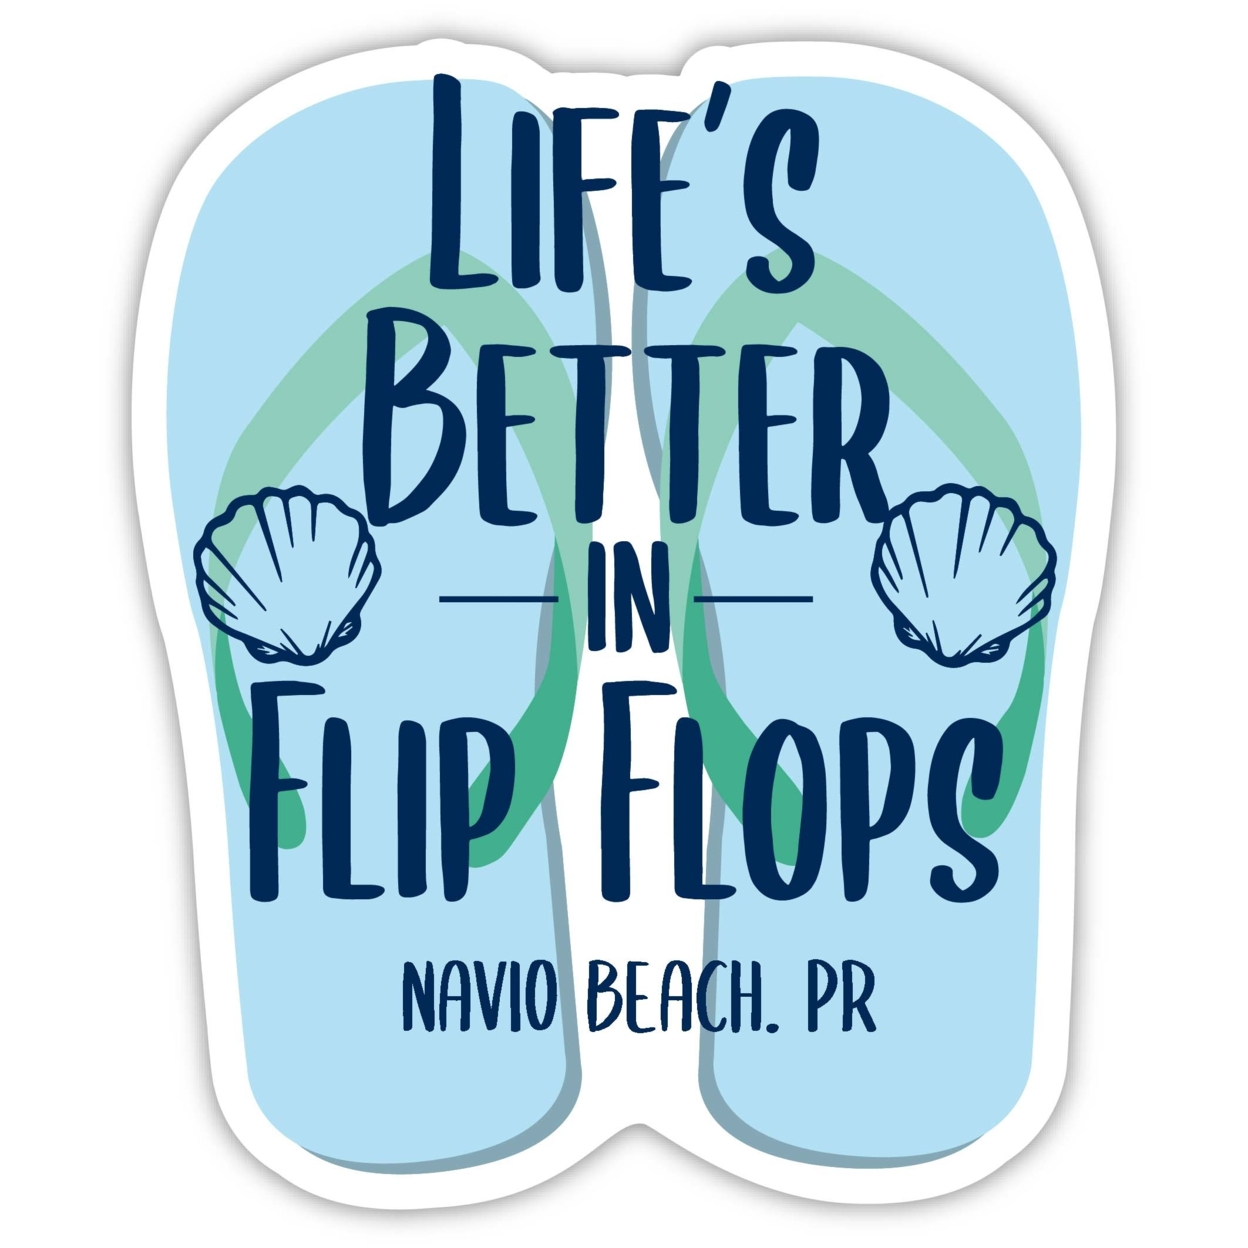 Navio Beach Puerto Rico Souvenir 4 Inch Vinyl Decal Sticker Flip Flop Design